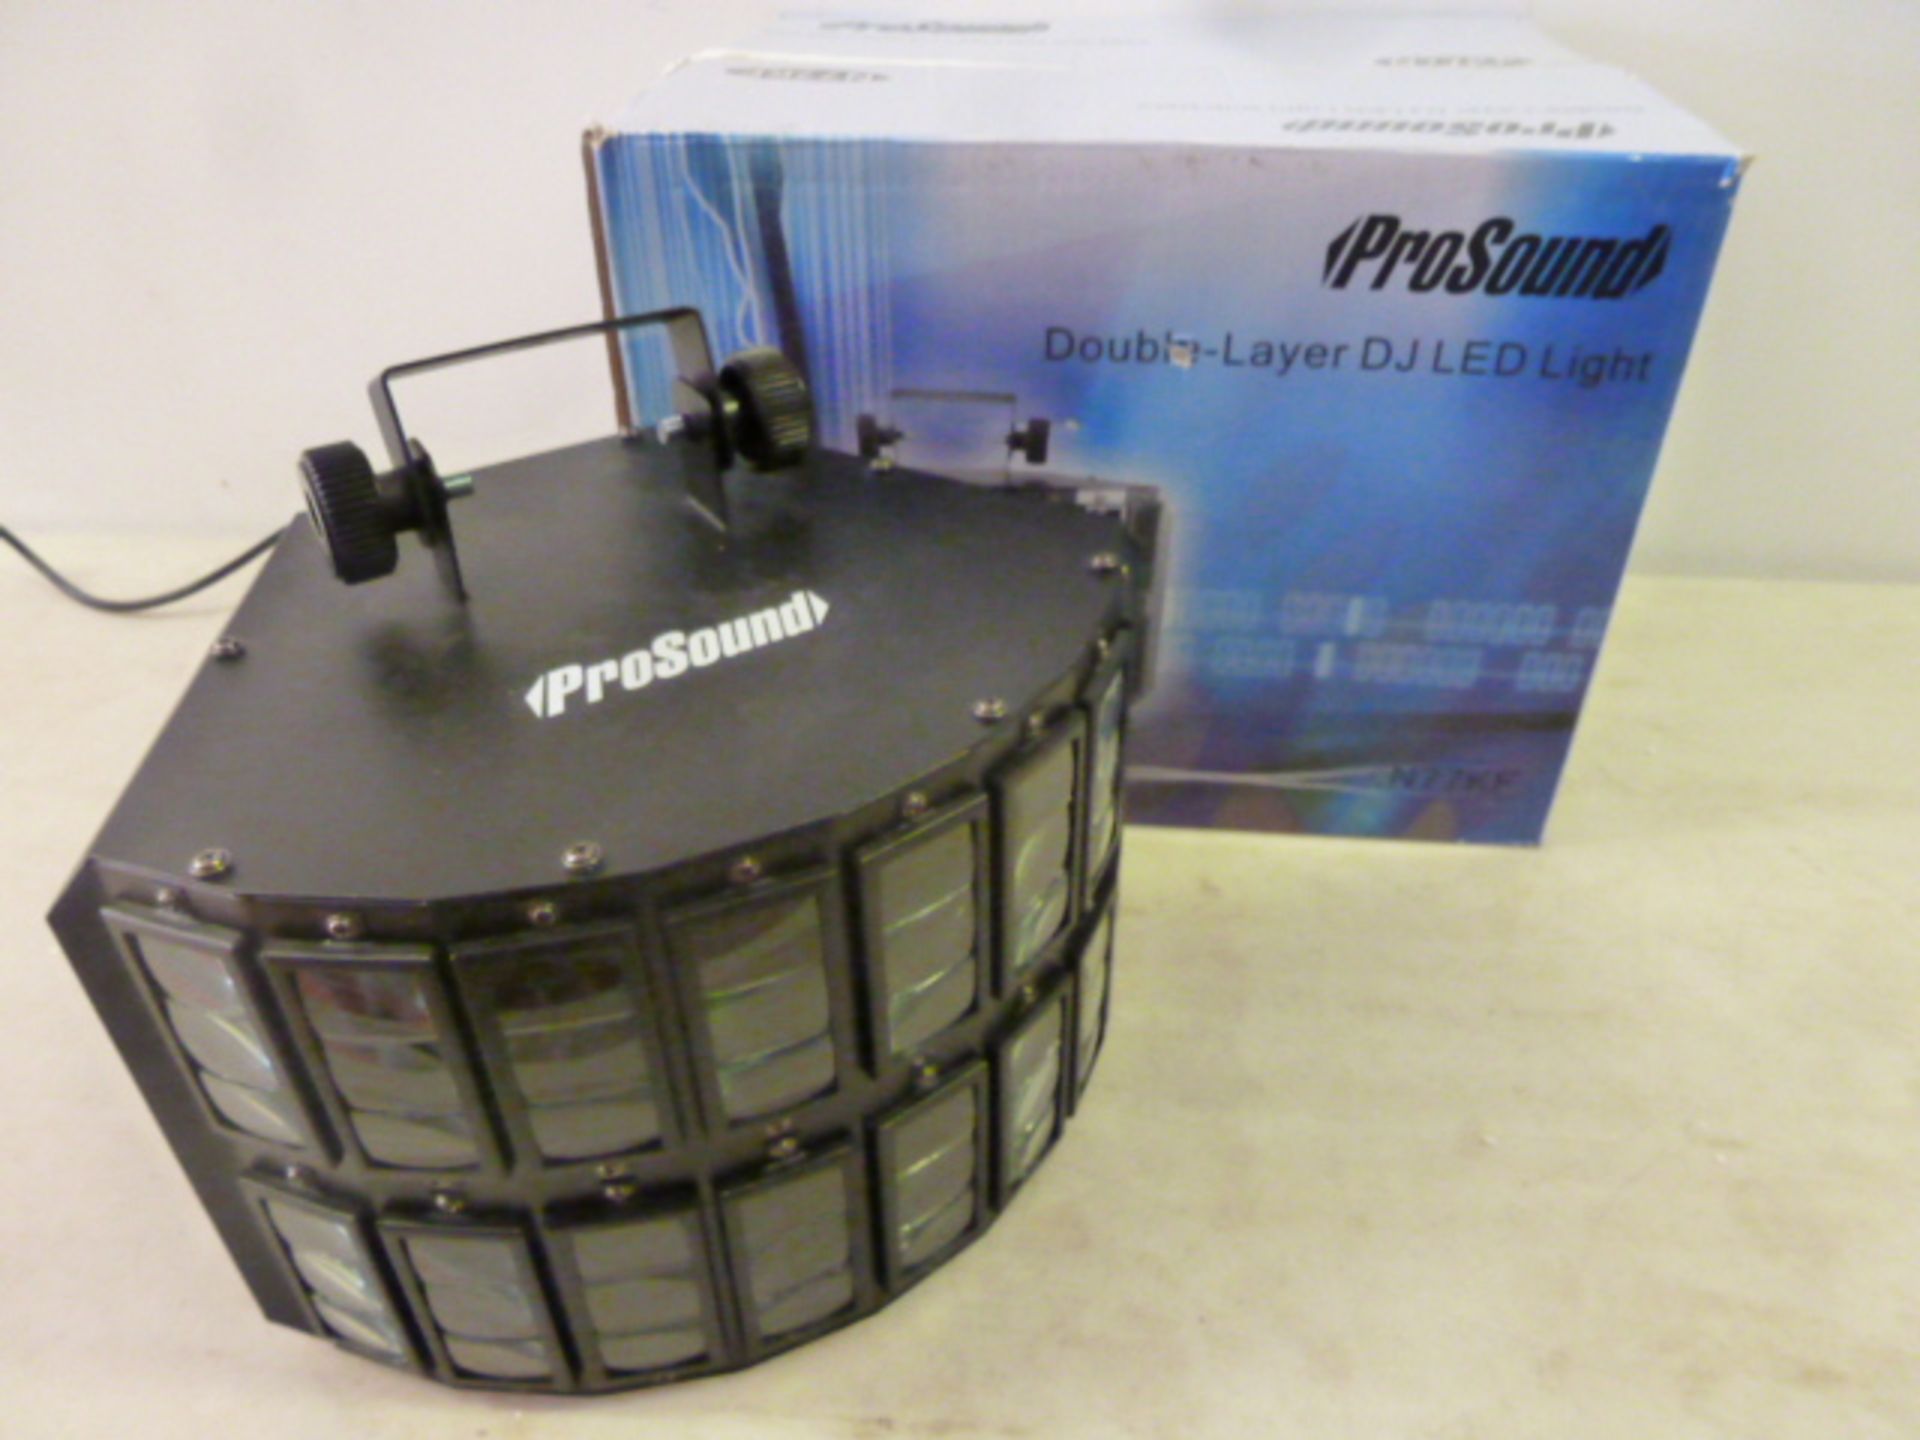 ProSound Double Layer DJ LED Light with DMX, Model N77KF, In Original Box.